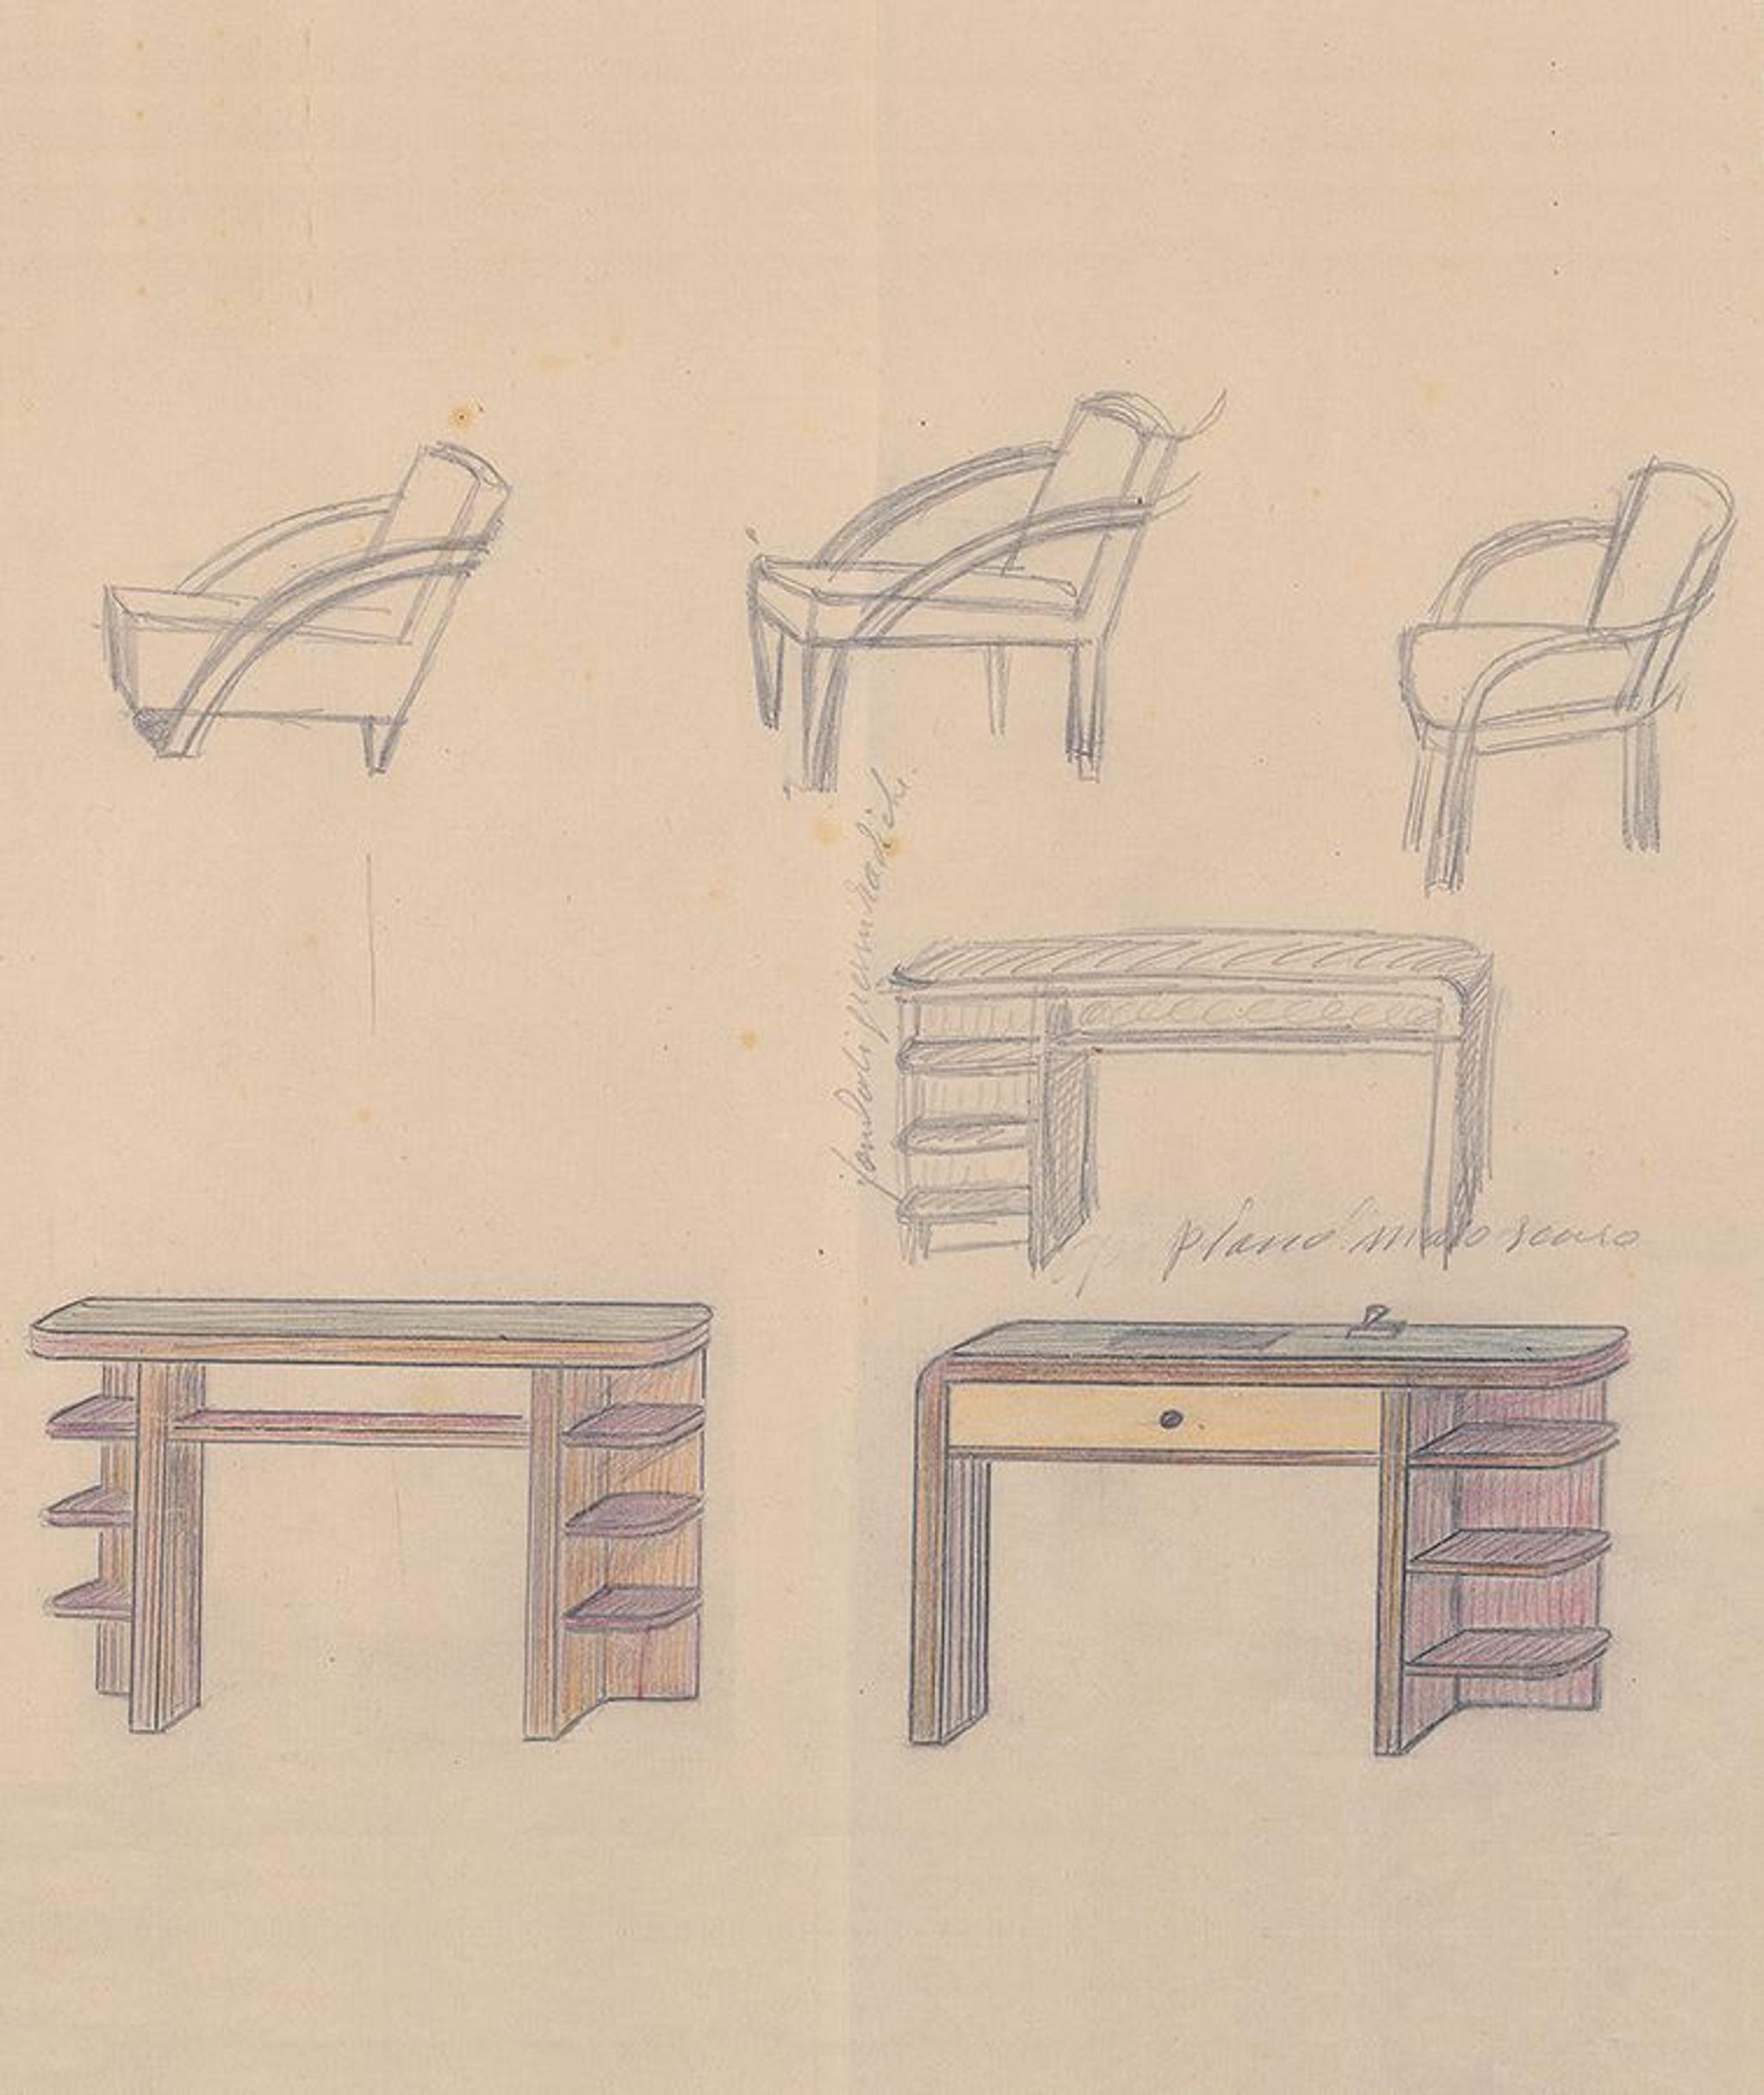 Sketch of mixed furniture by Antonio Berdondini